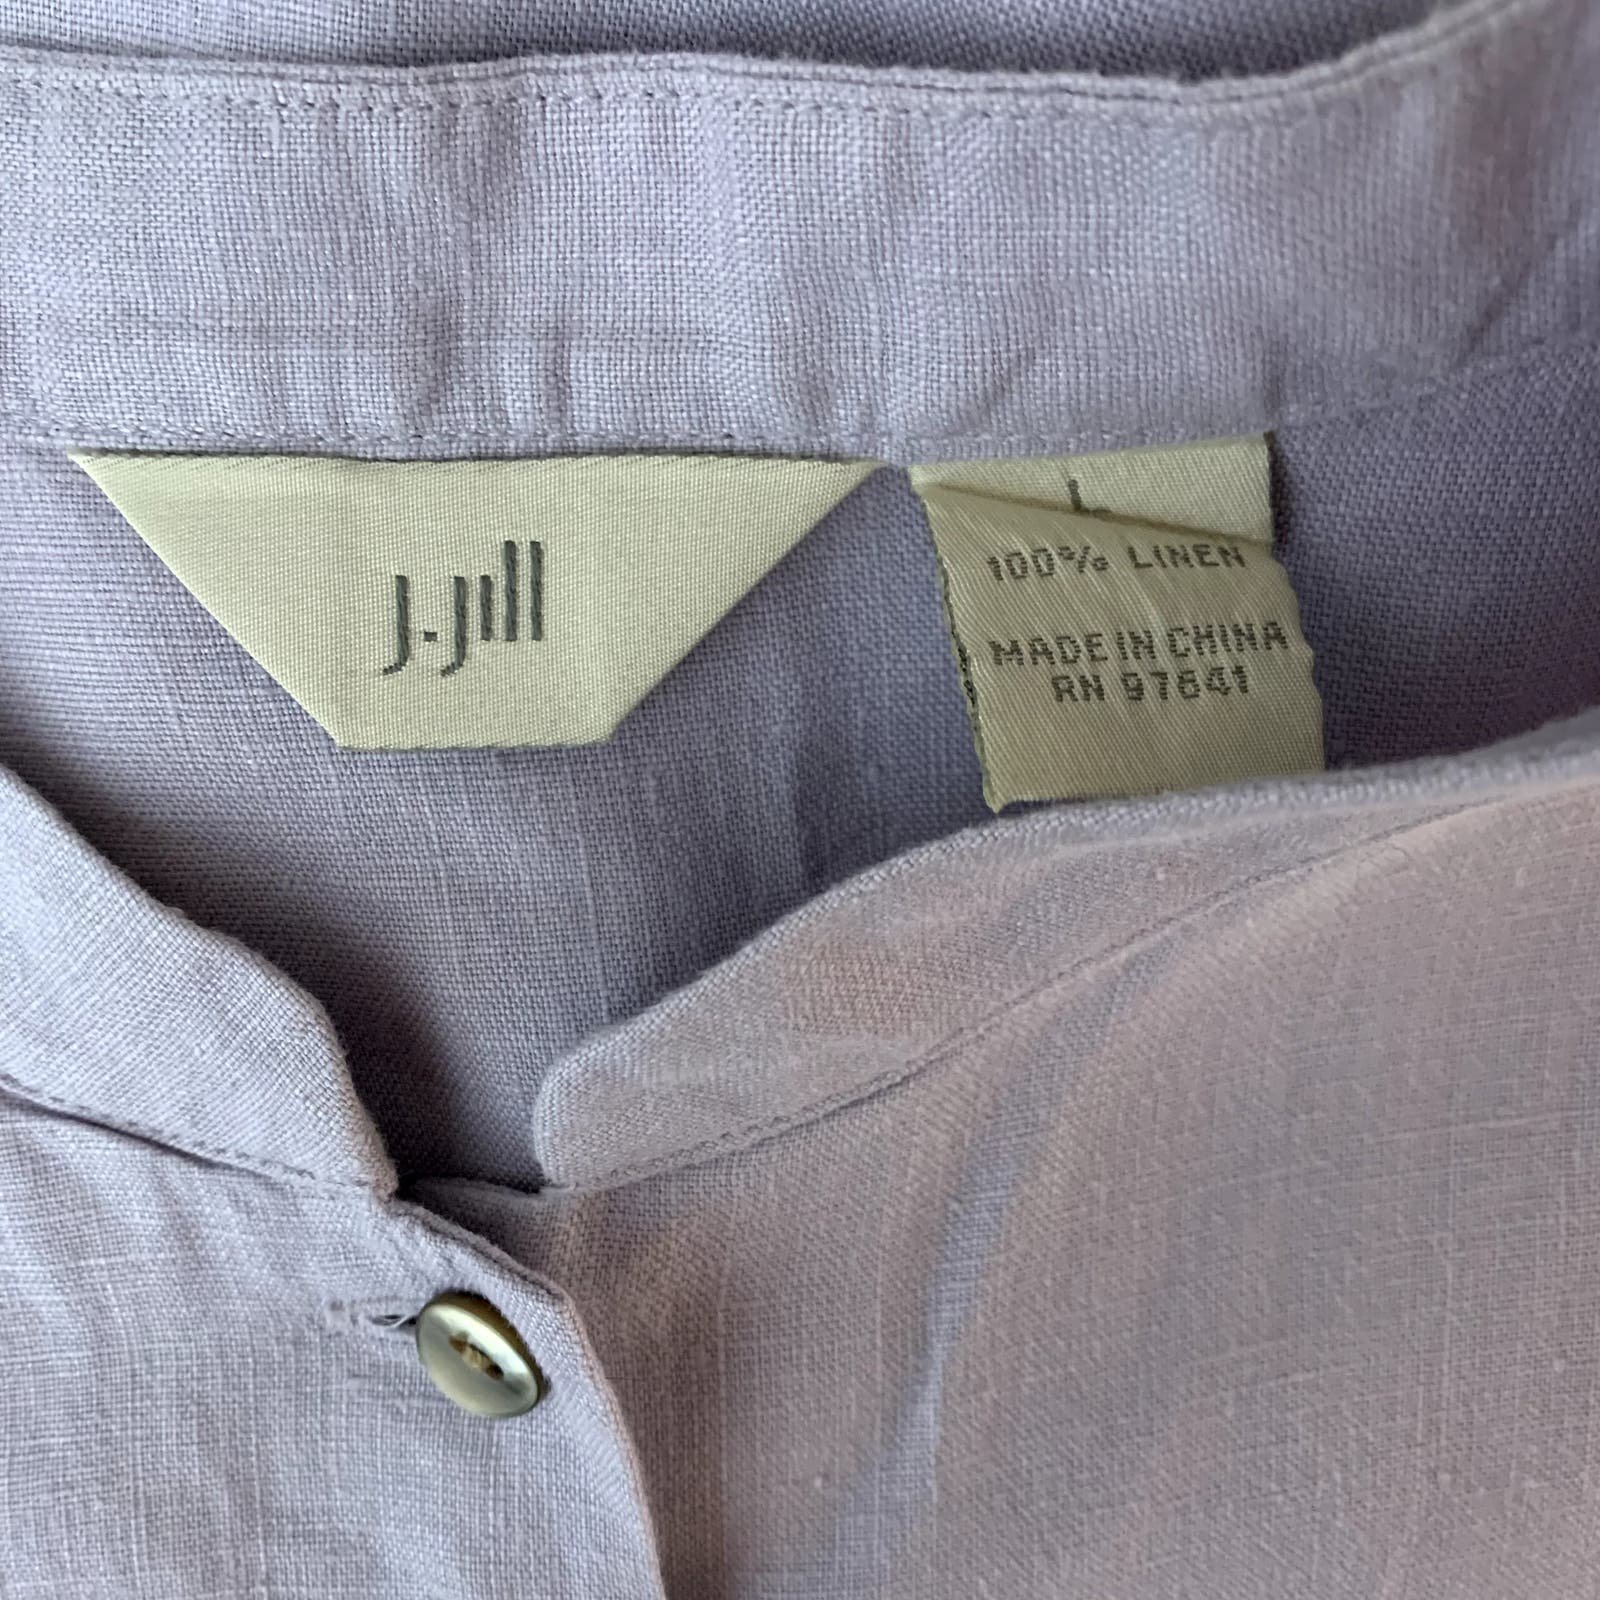 Exclusive J. Jill Purple Linen Tunic Top Size Large heDcCguTZ Store Online